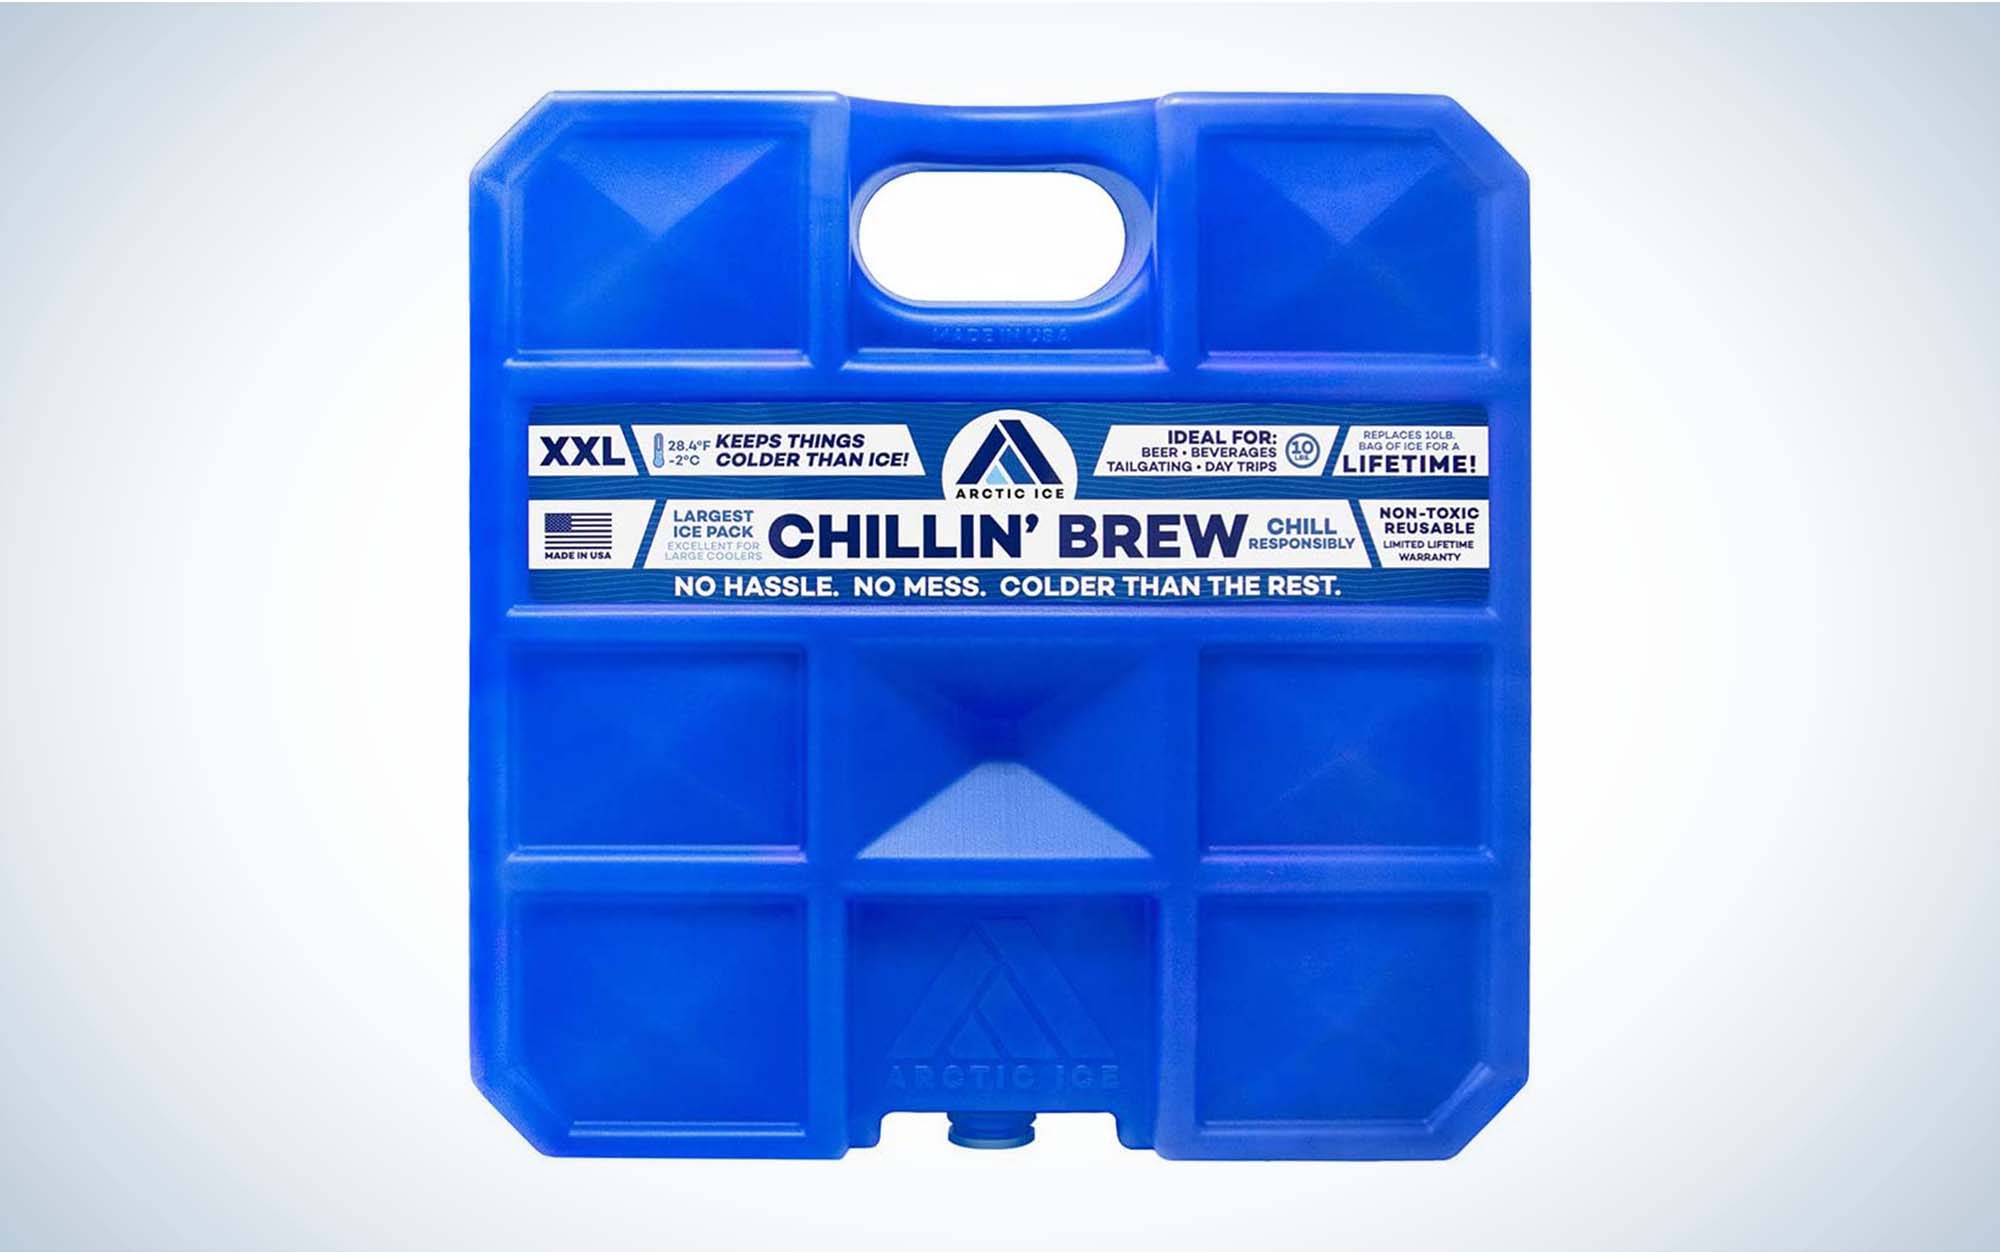 The Arctic Ice Chillinâ Brew is the most versatile ice pack.